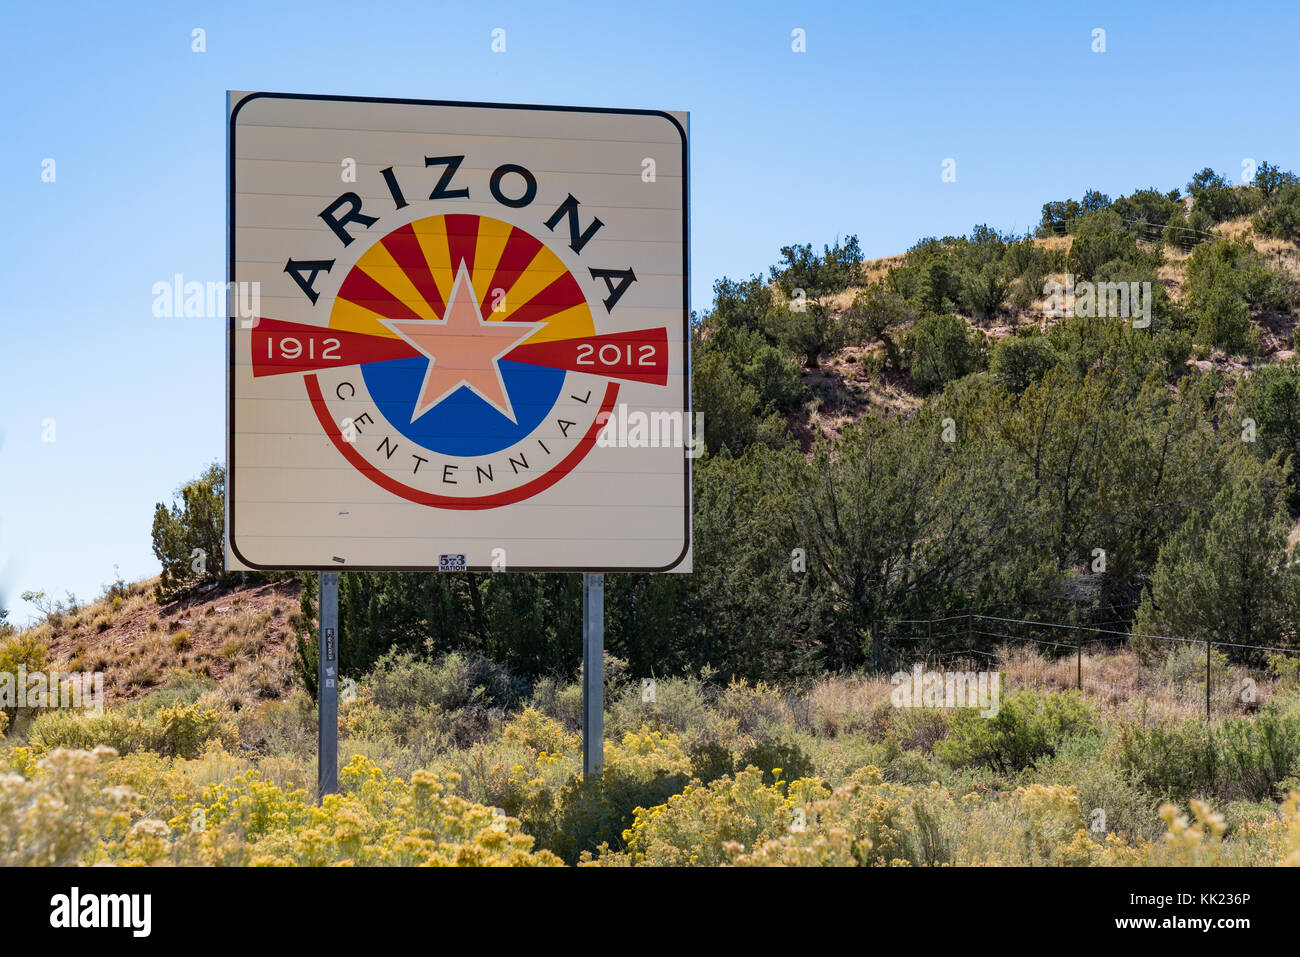 ARIZONA, USA - OCTOBER 13, 2017: Arizona welcome sign at the state border along highway Stock Photo